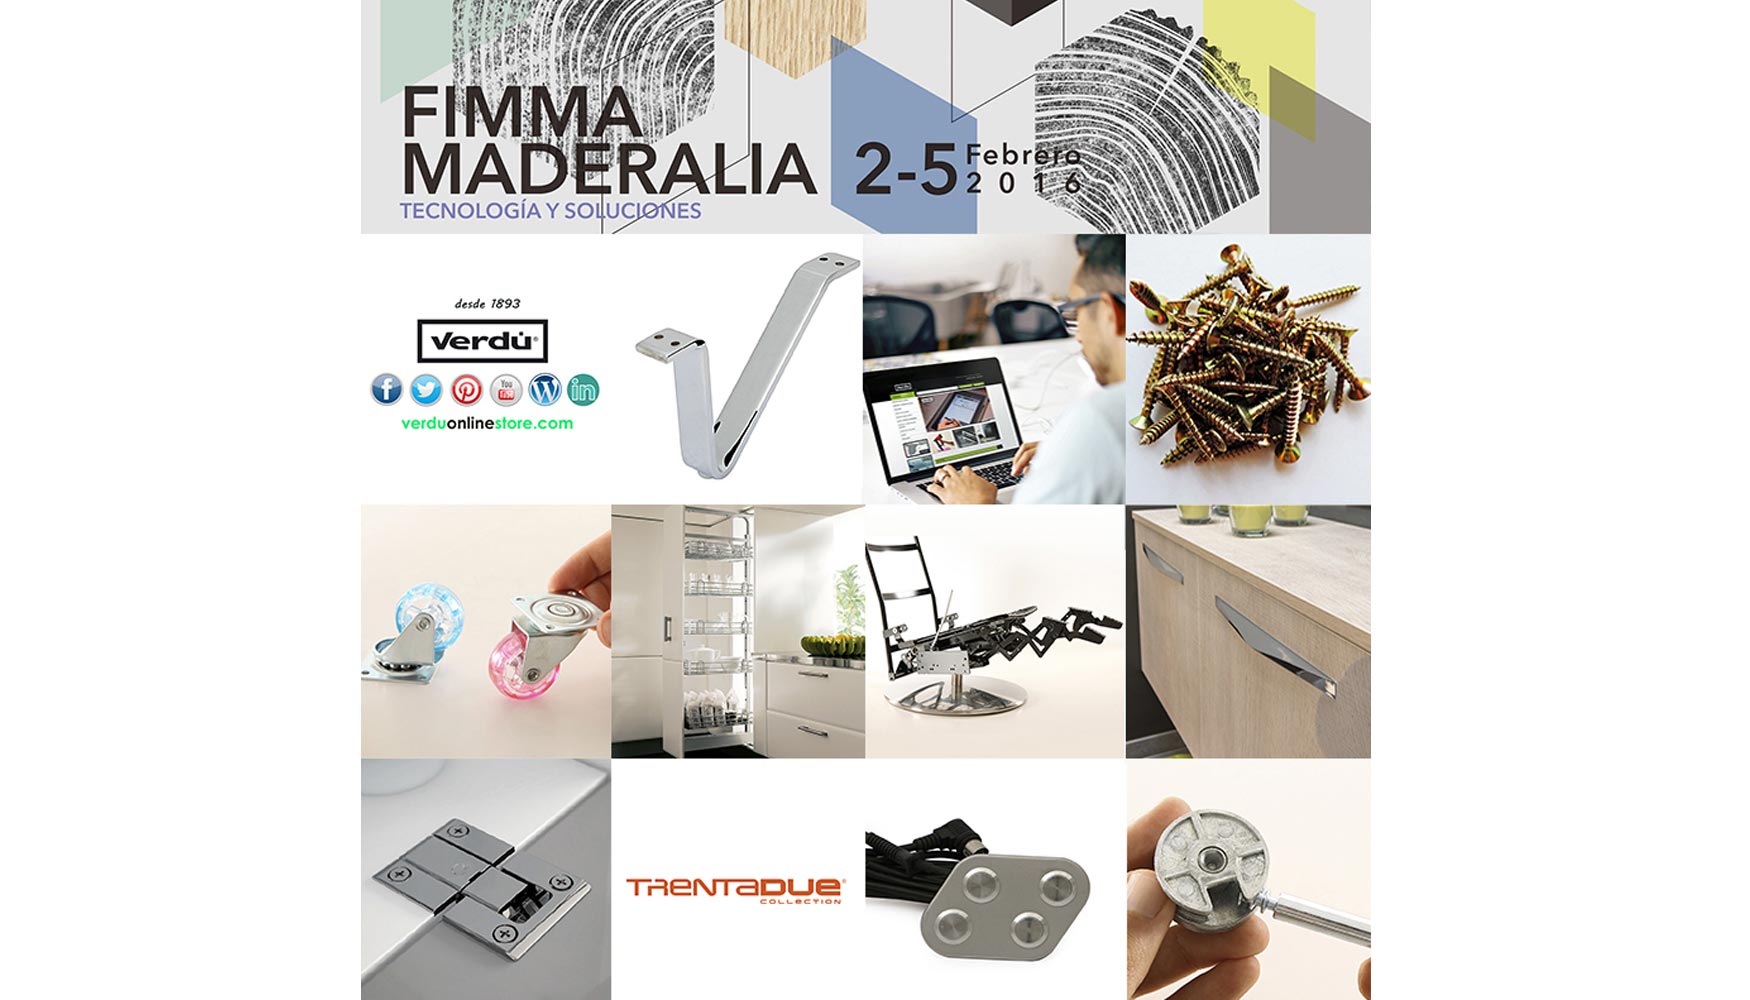 Cartel promocional para Fimma-Maderalia